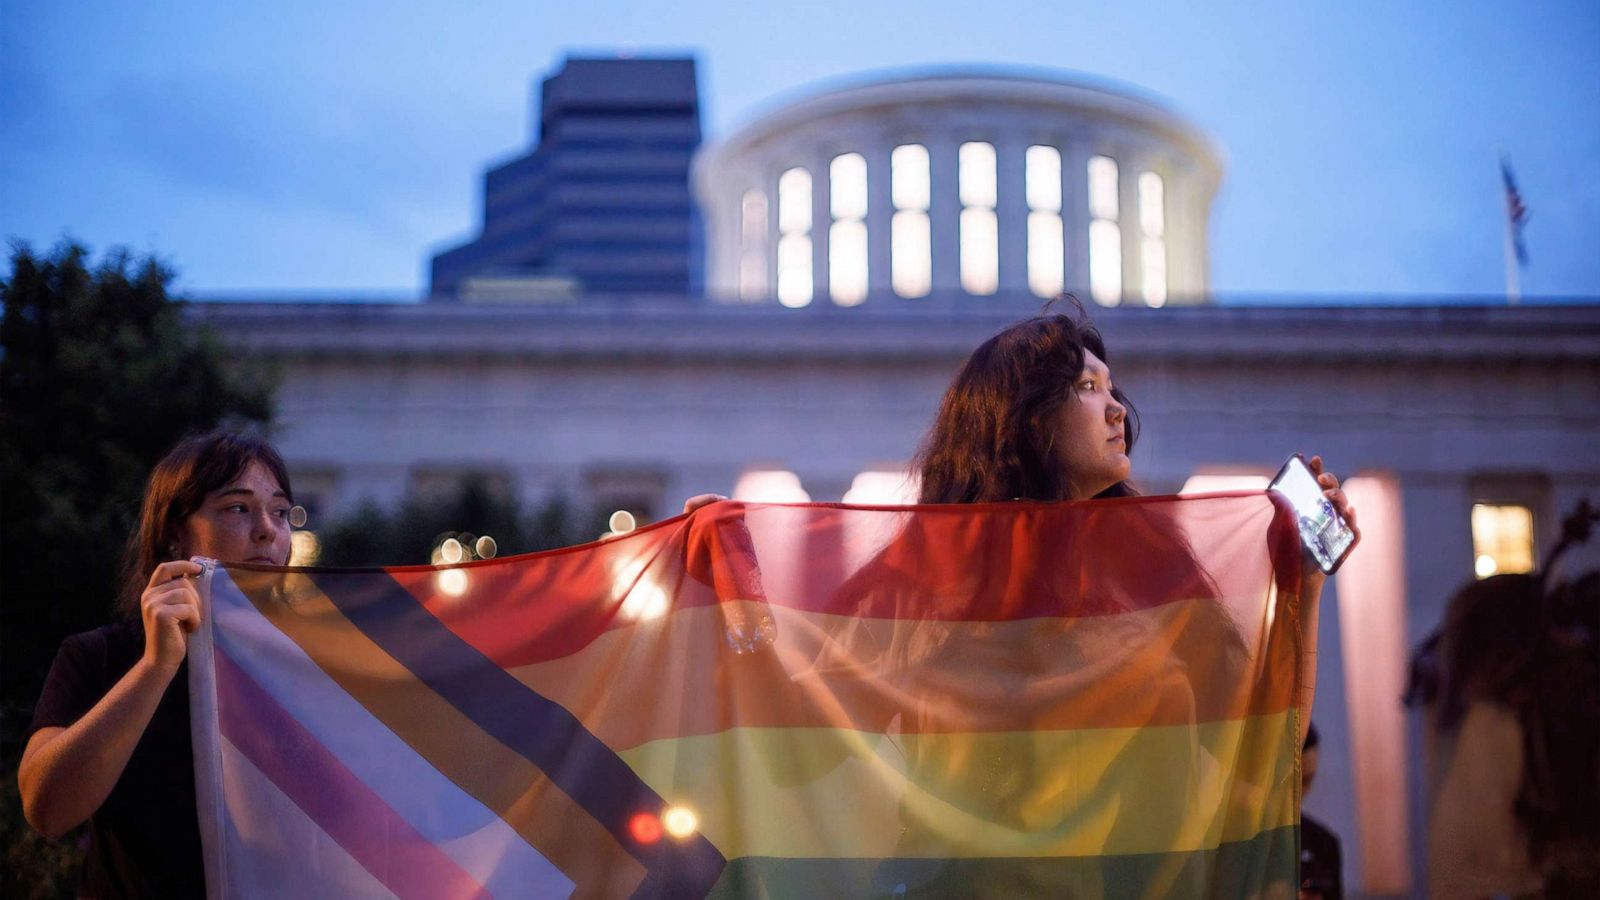 Florida expands ‘don’t say gay’ law, House approves anti-LGBTQ bills